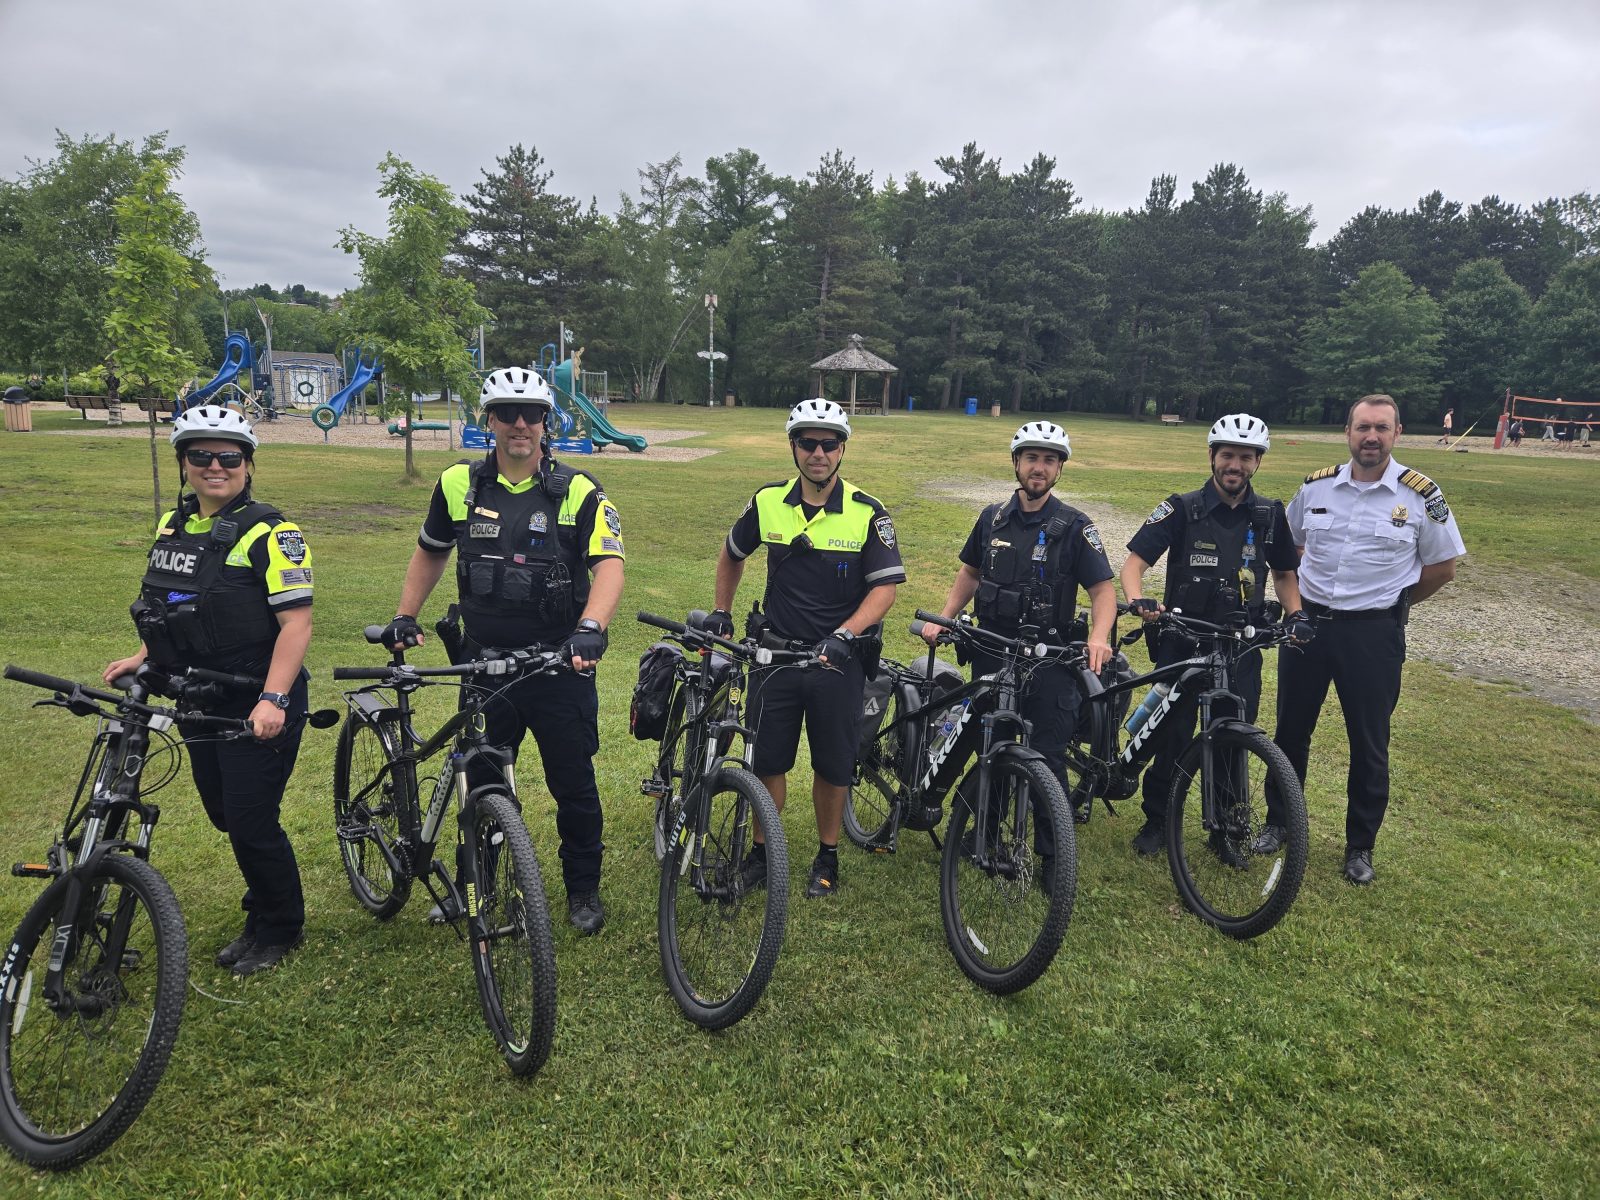 Sherbrooke Police enhance presence with Bike Patrol Officers